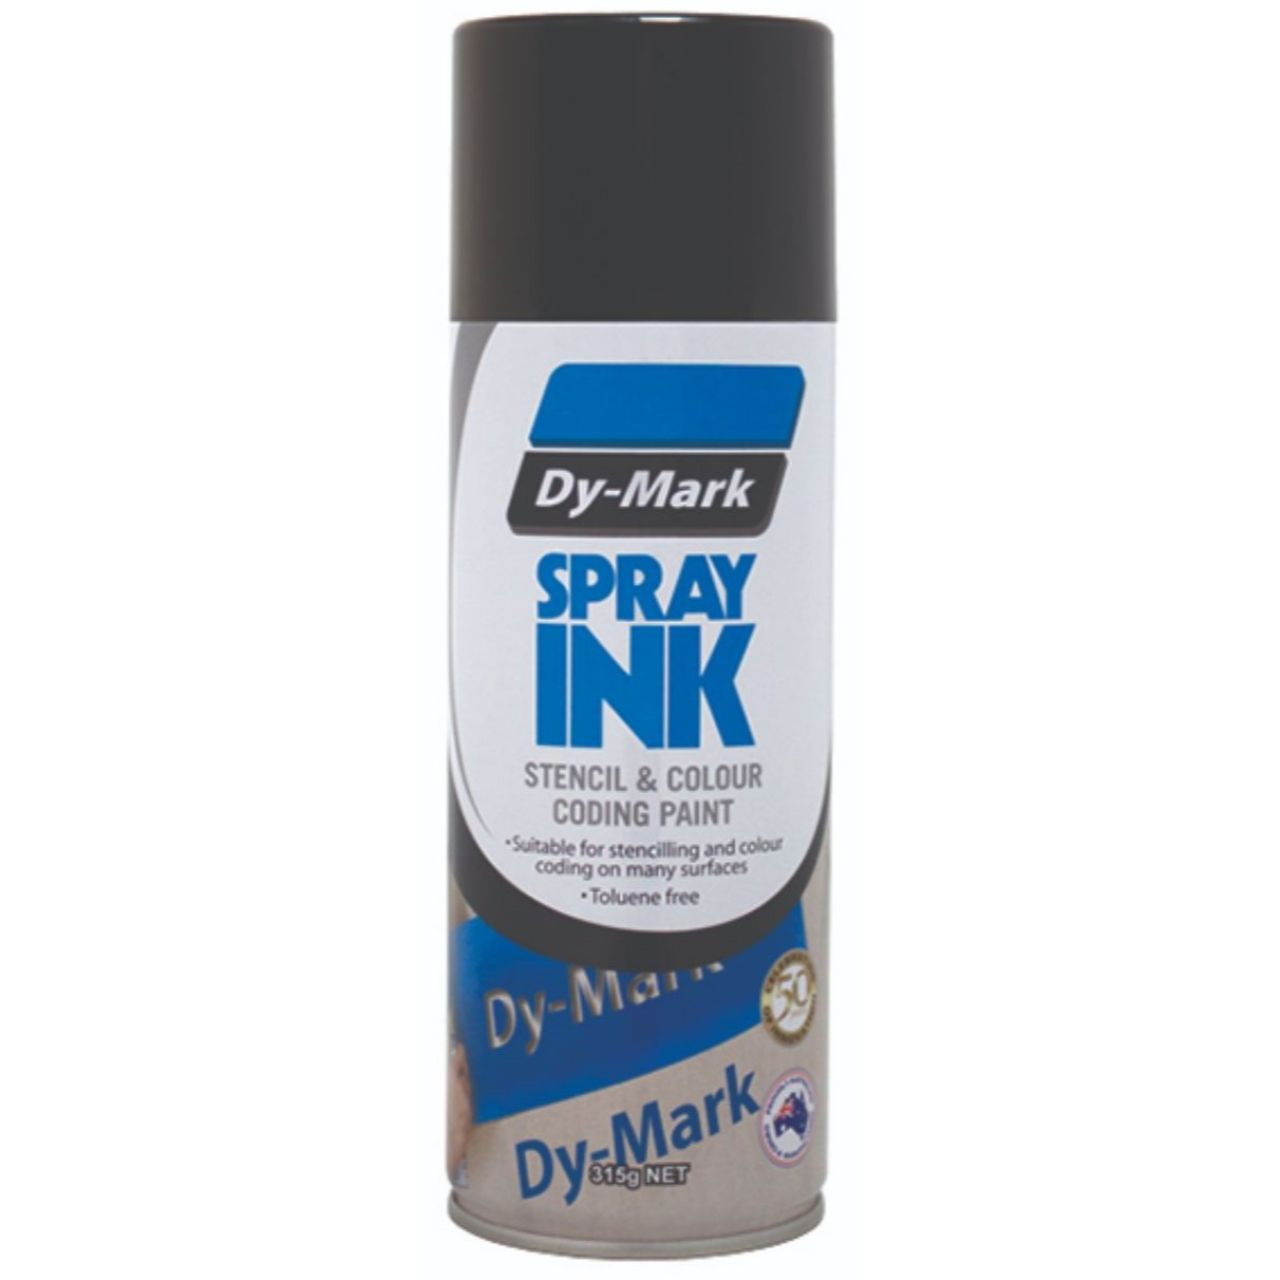 Dy-Mark Spray Ink Black 315g